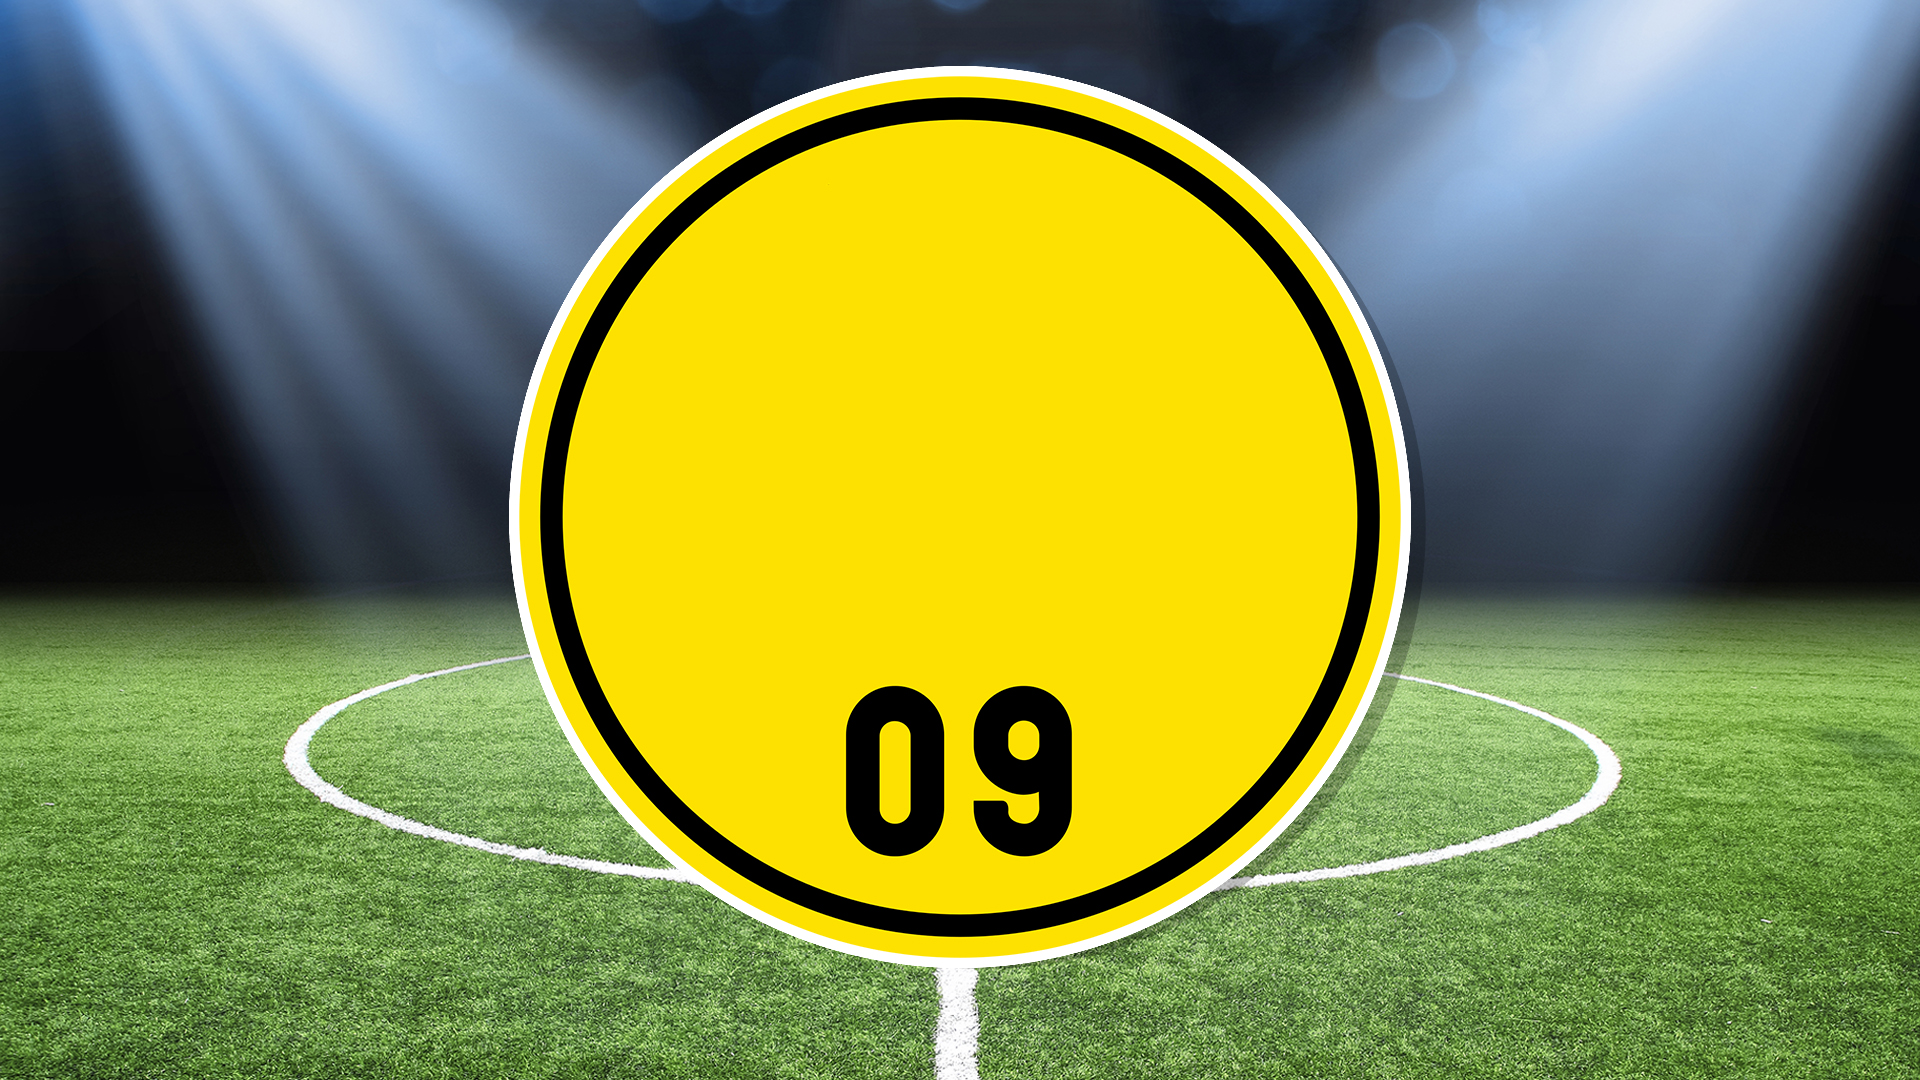 98 Football club badges - Top European leagues Quiz - By MonsterLeopard